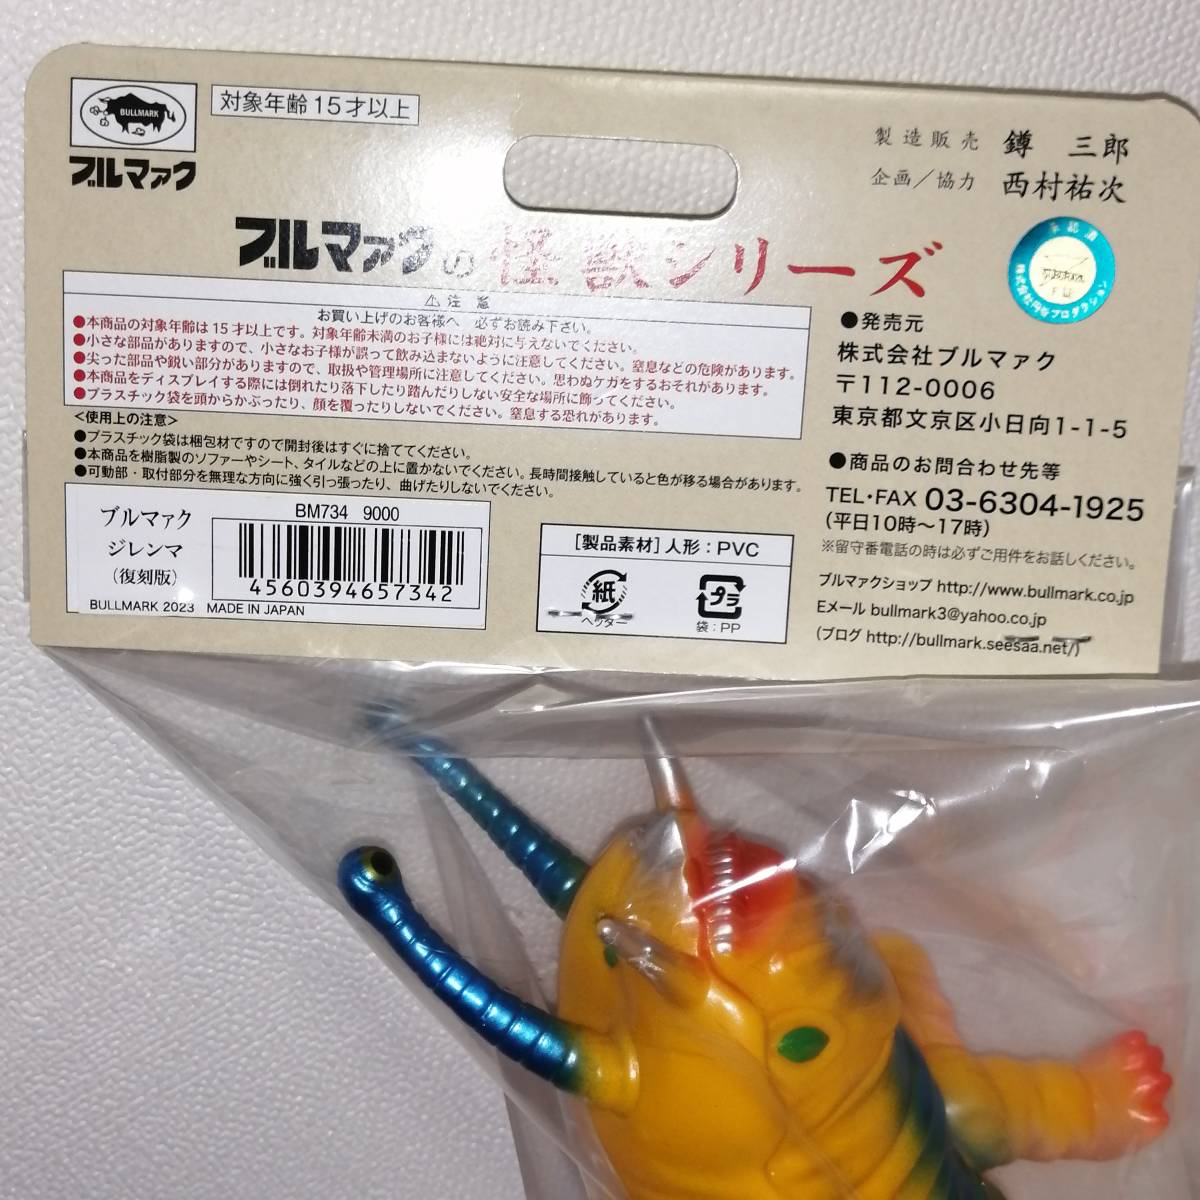 BULLMARKbruma.k sofvi ji Len ma желтый осмотр Ultraman Taro M1 номер maru солнечный Bear модель 